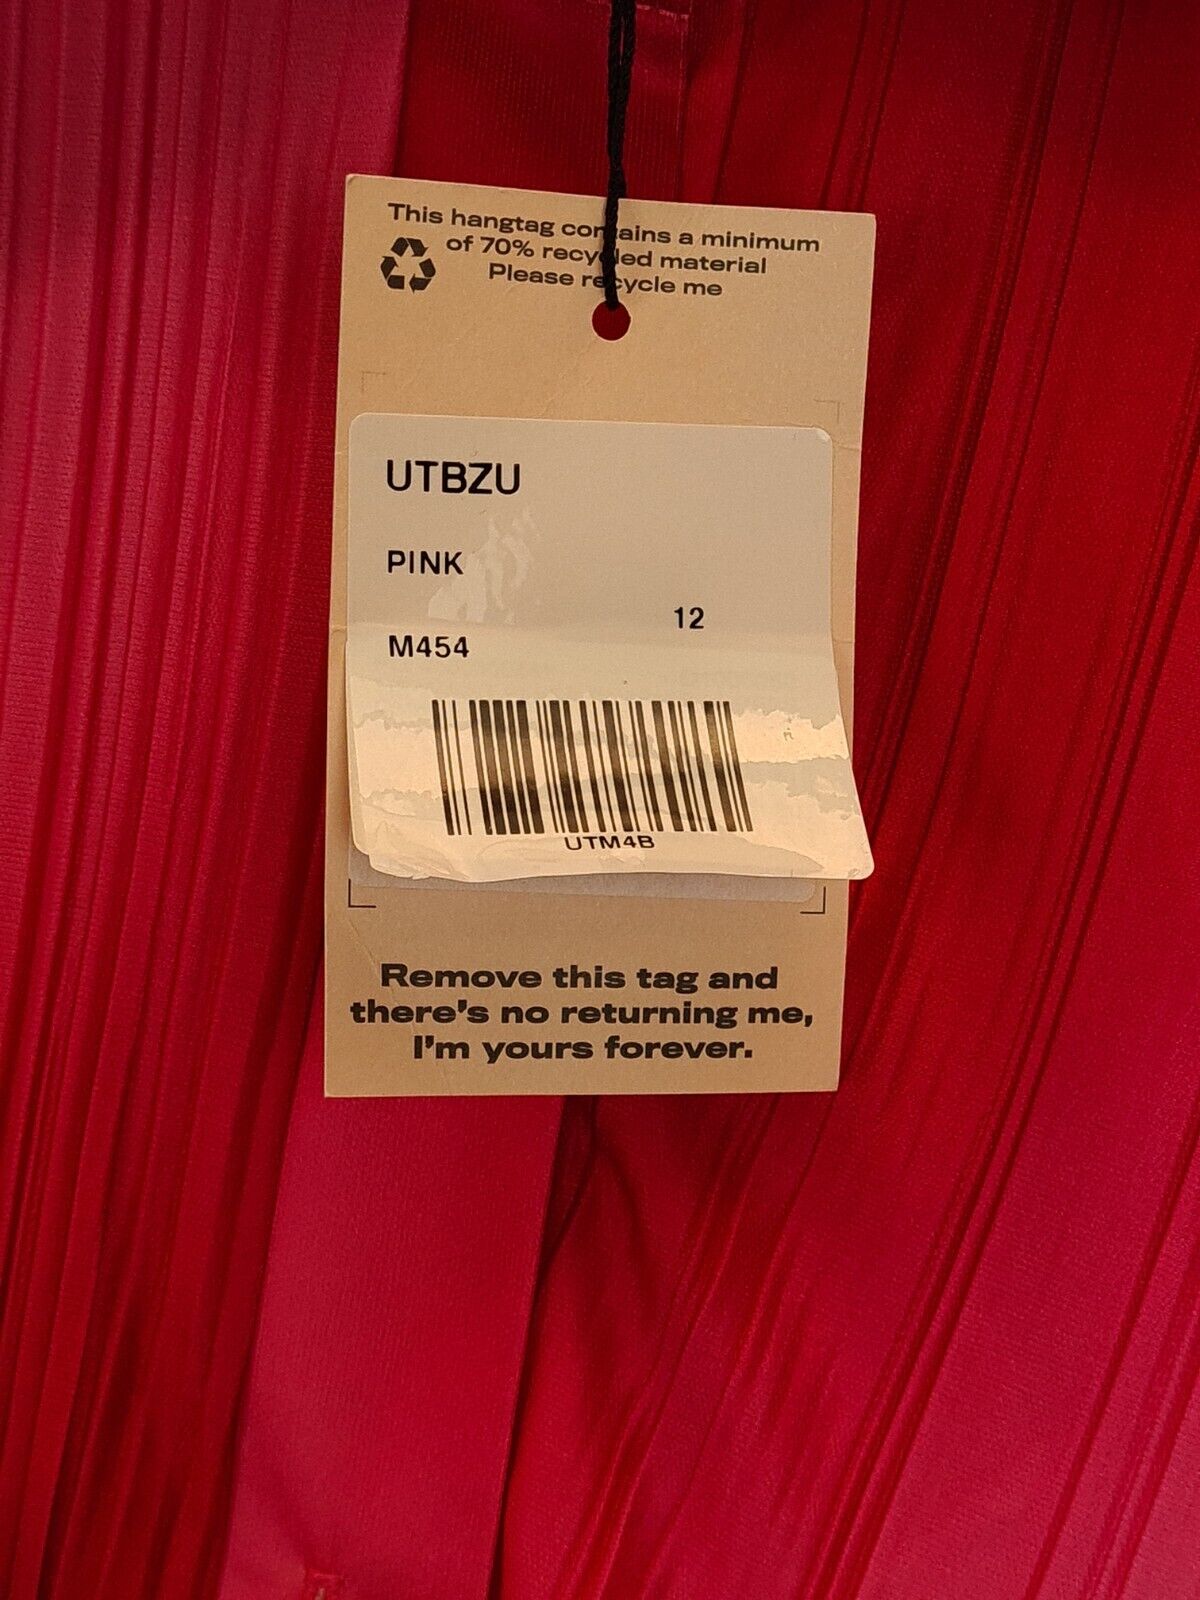 Missguided Tie Waist Shirt Dress Ombre Pink Size UK 12 **** V28